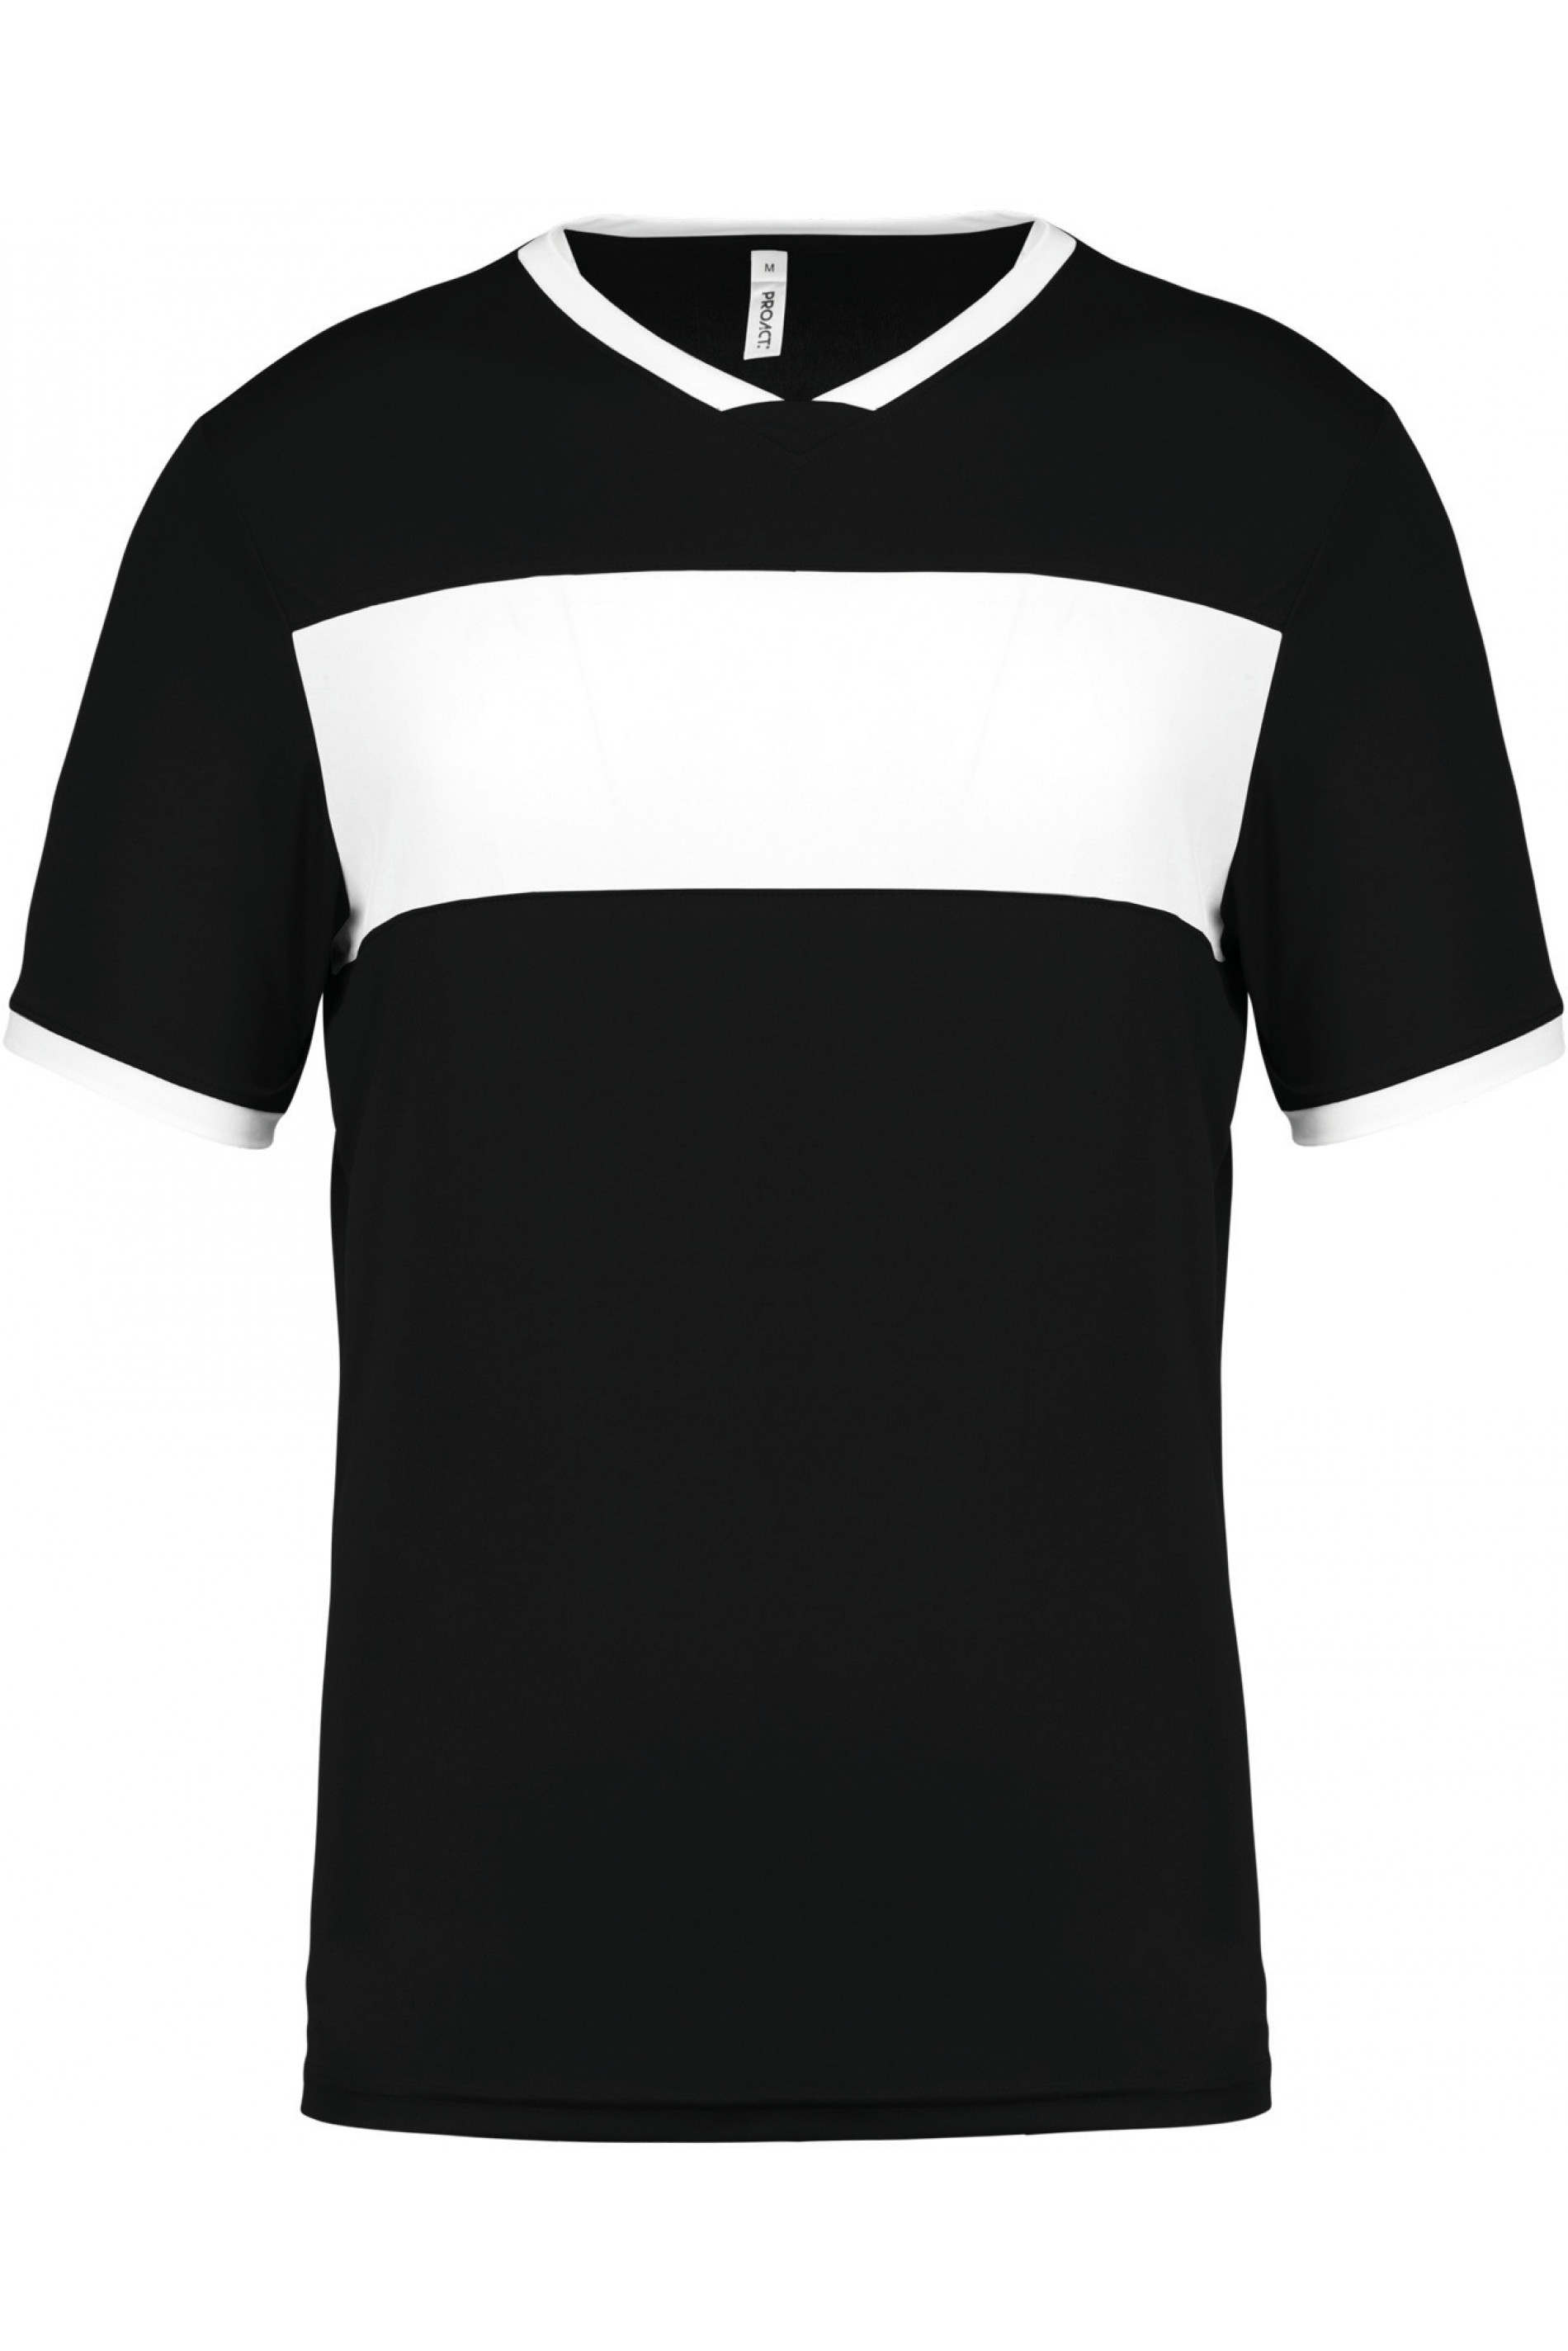 ProAct Adults short-sleeved jersey [PA4000]